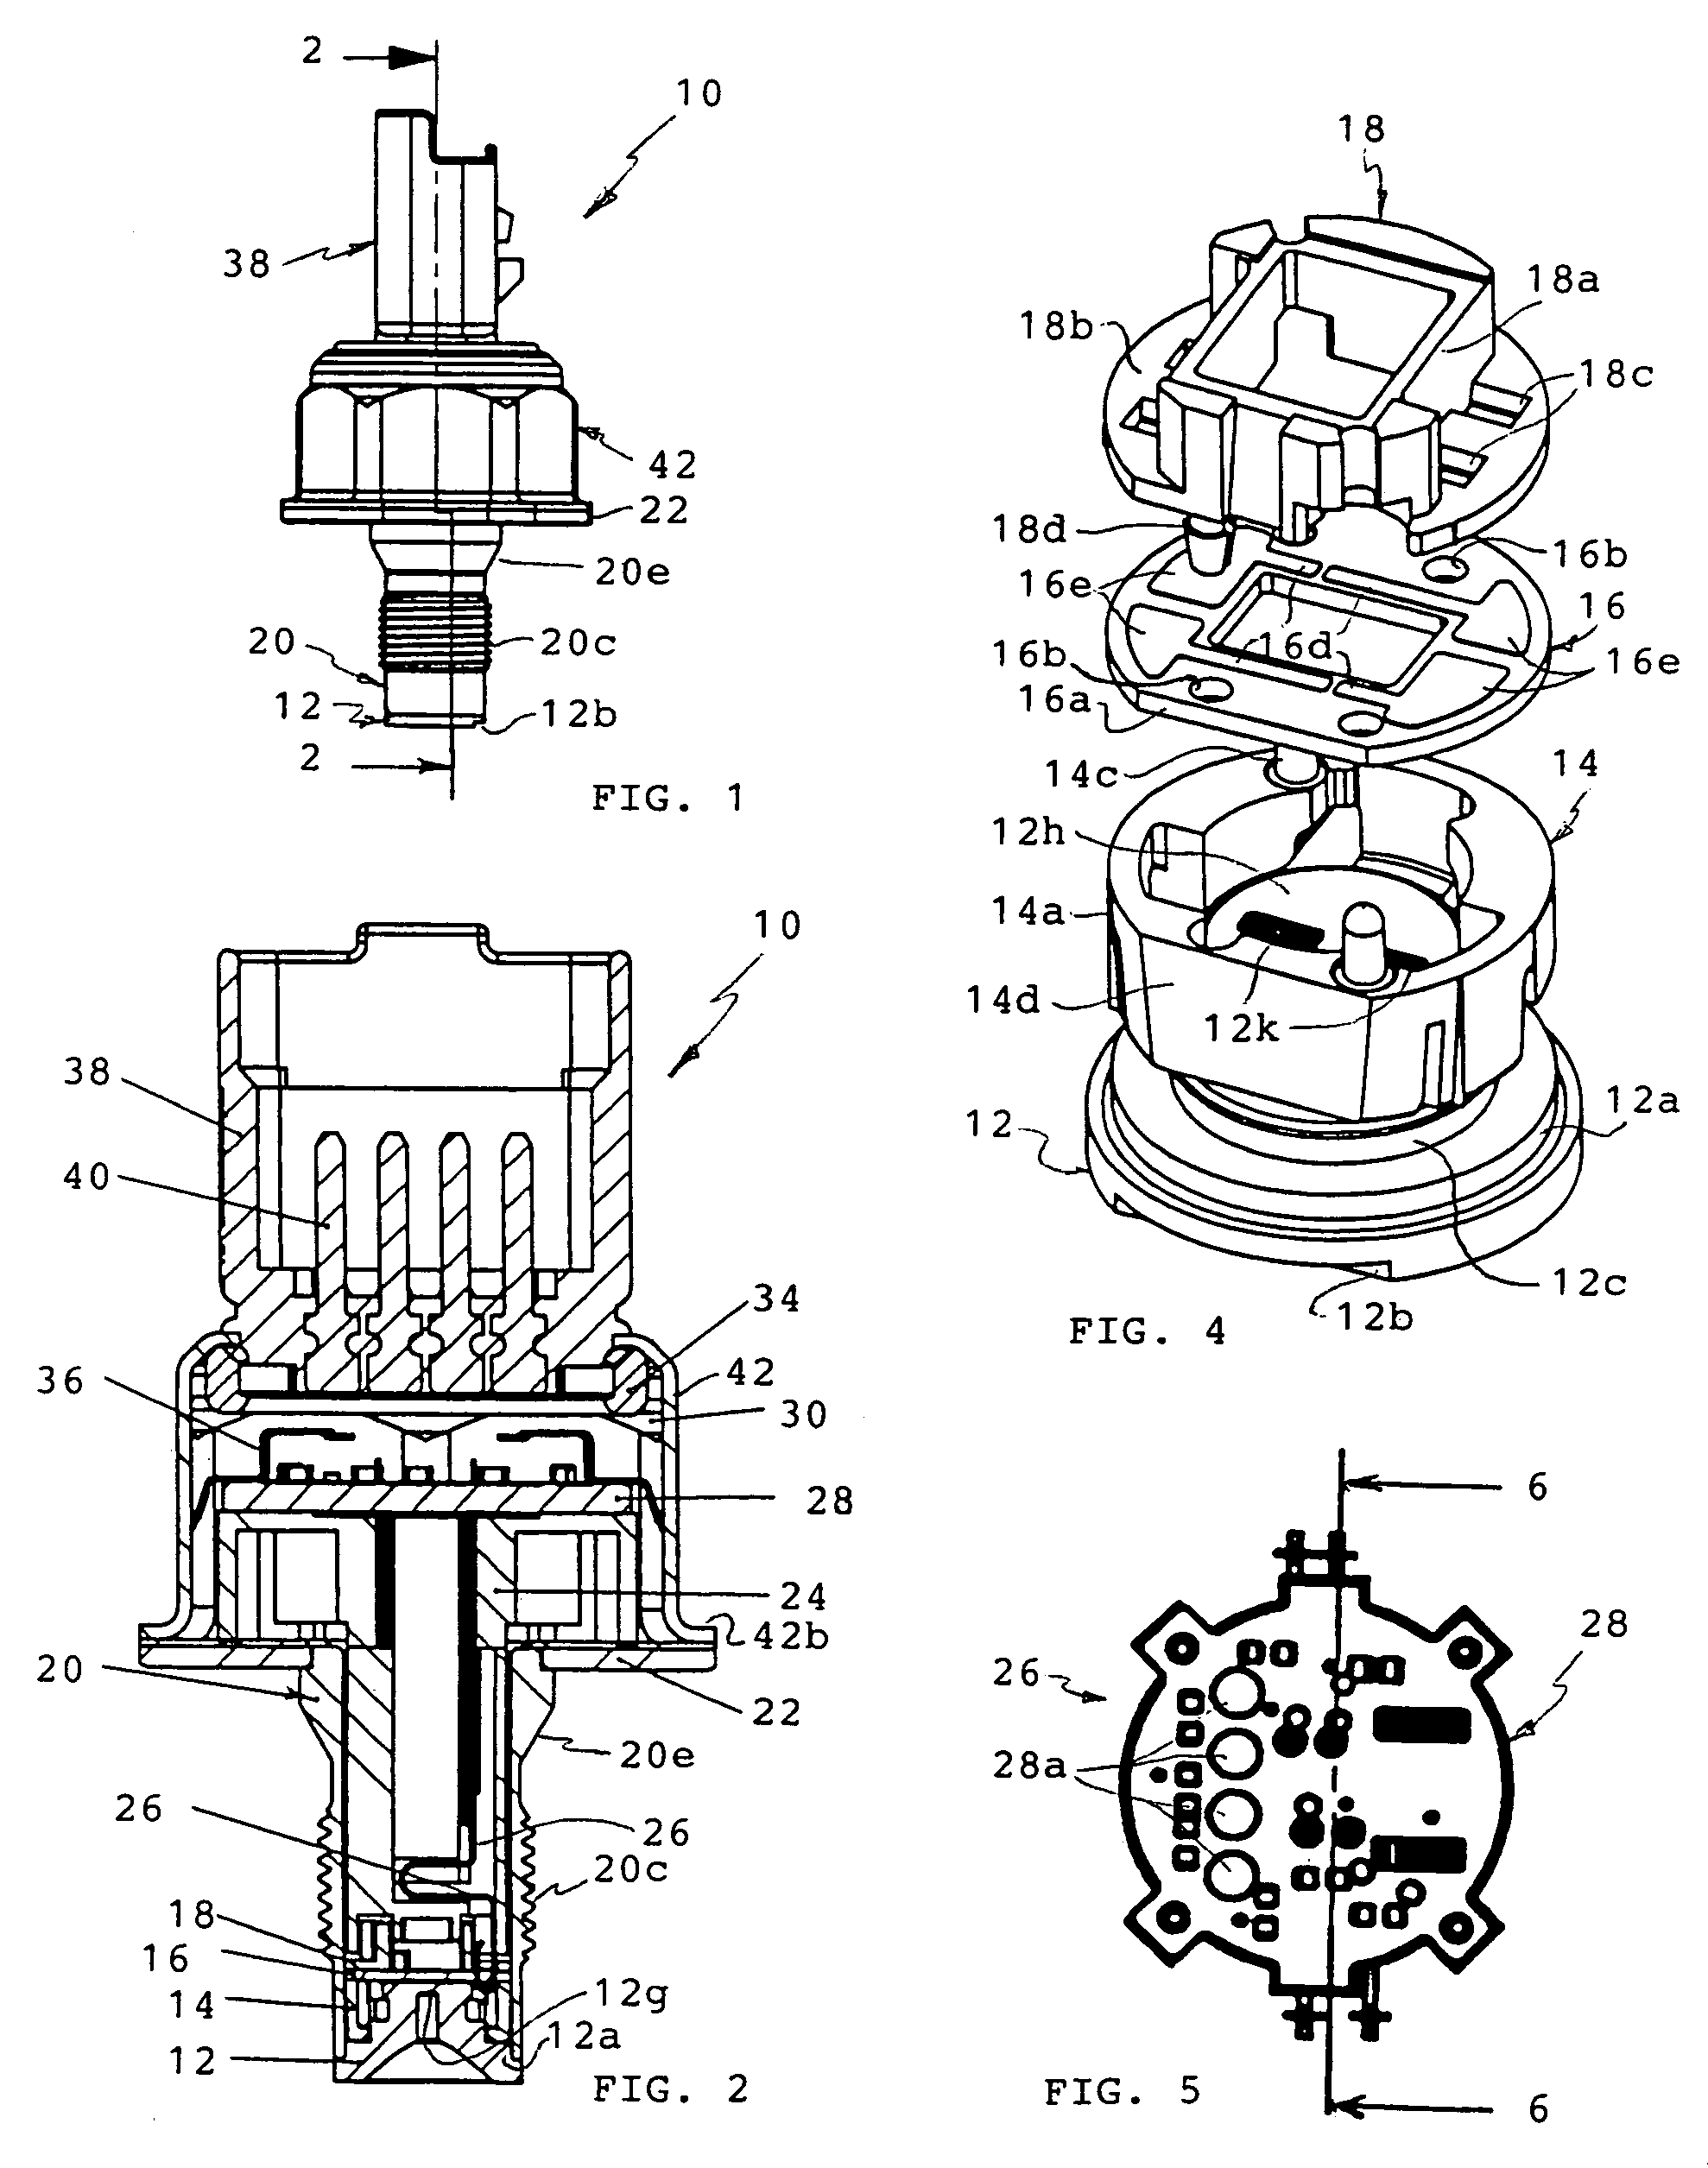 Combined pressure and temperature transducer